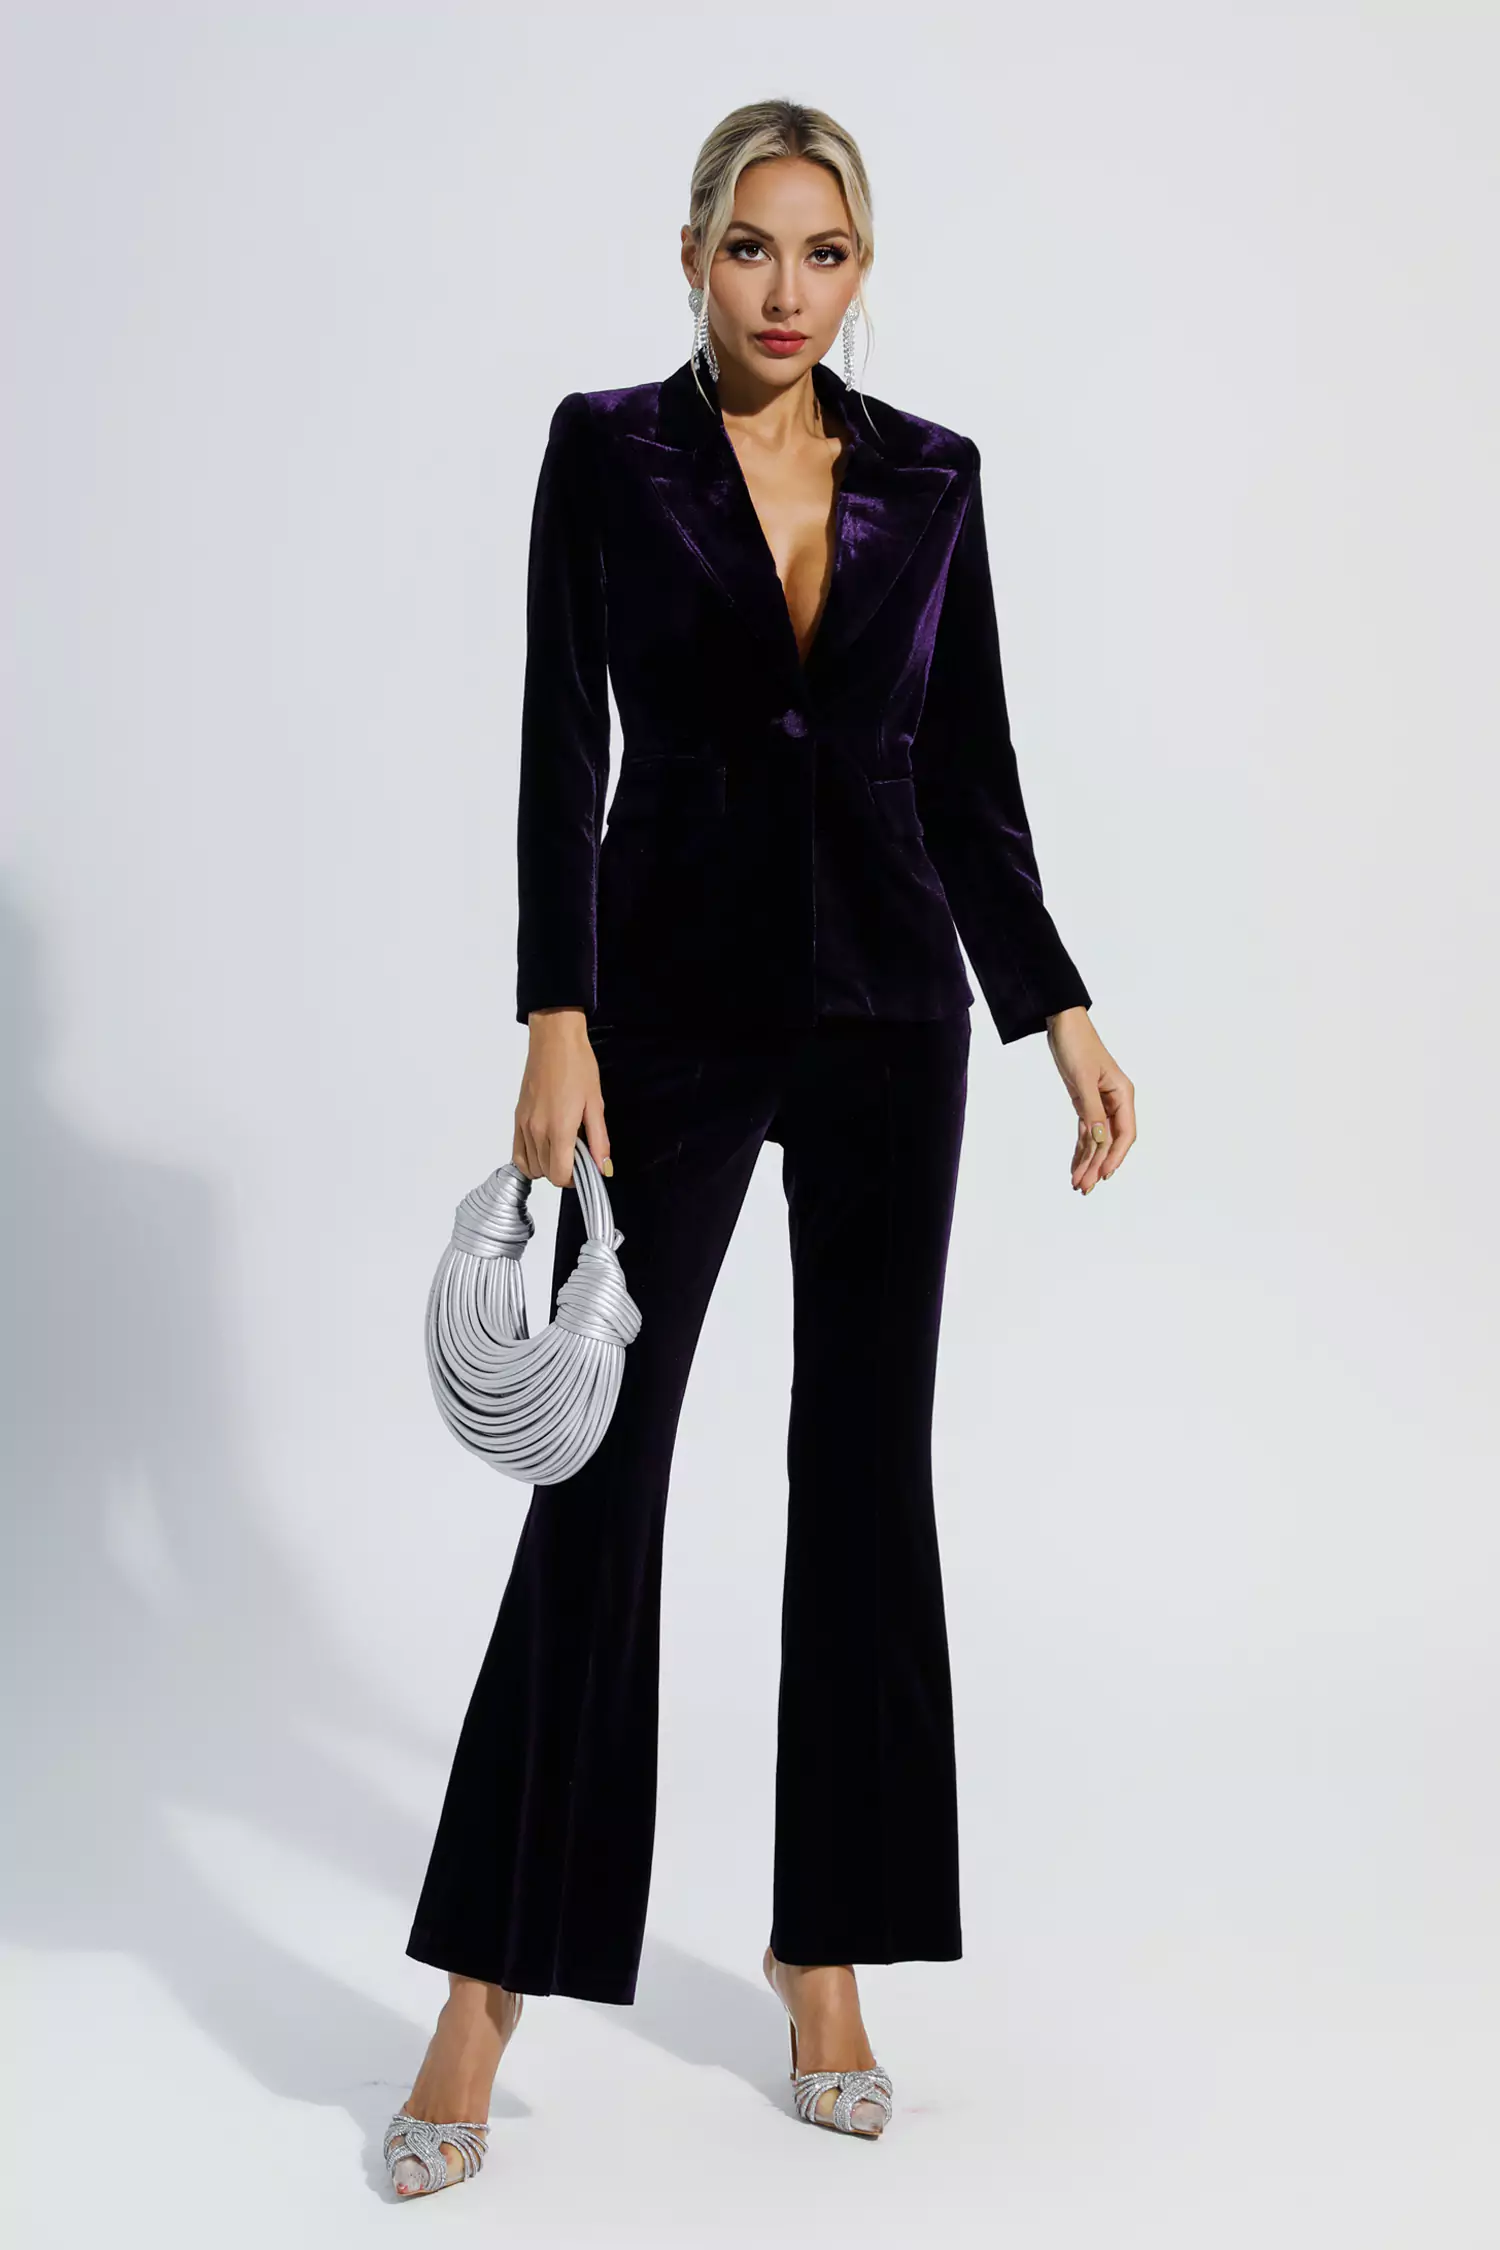 Aleena Purple Velvet Blazer Set